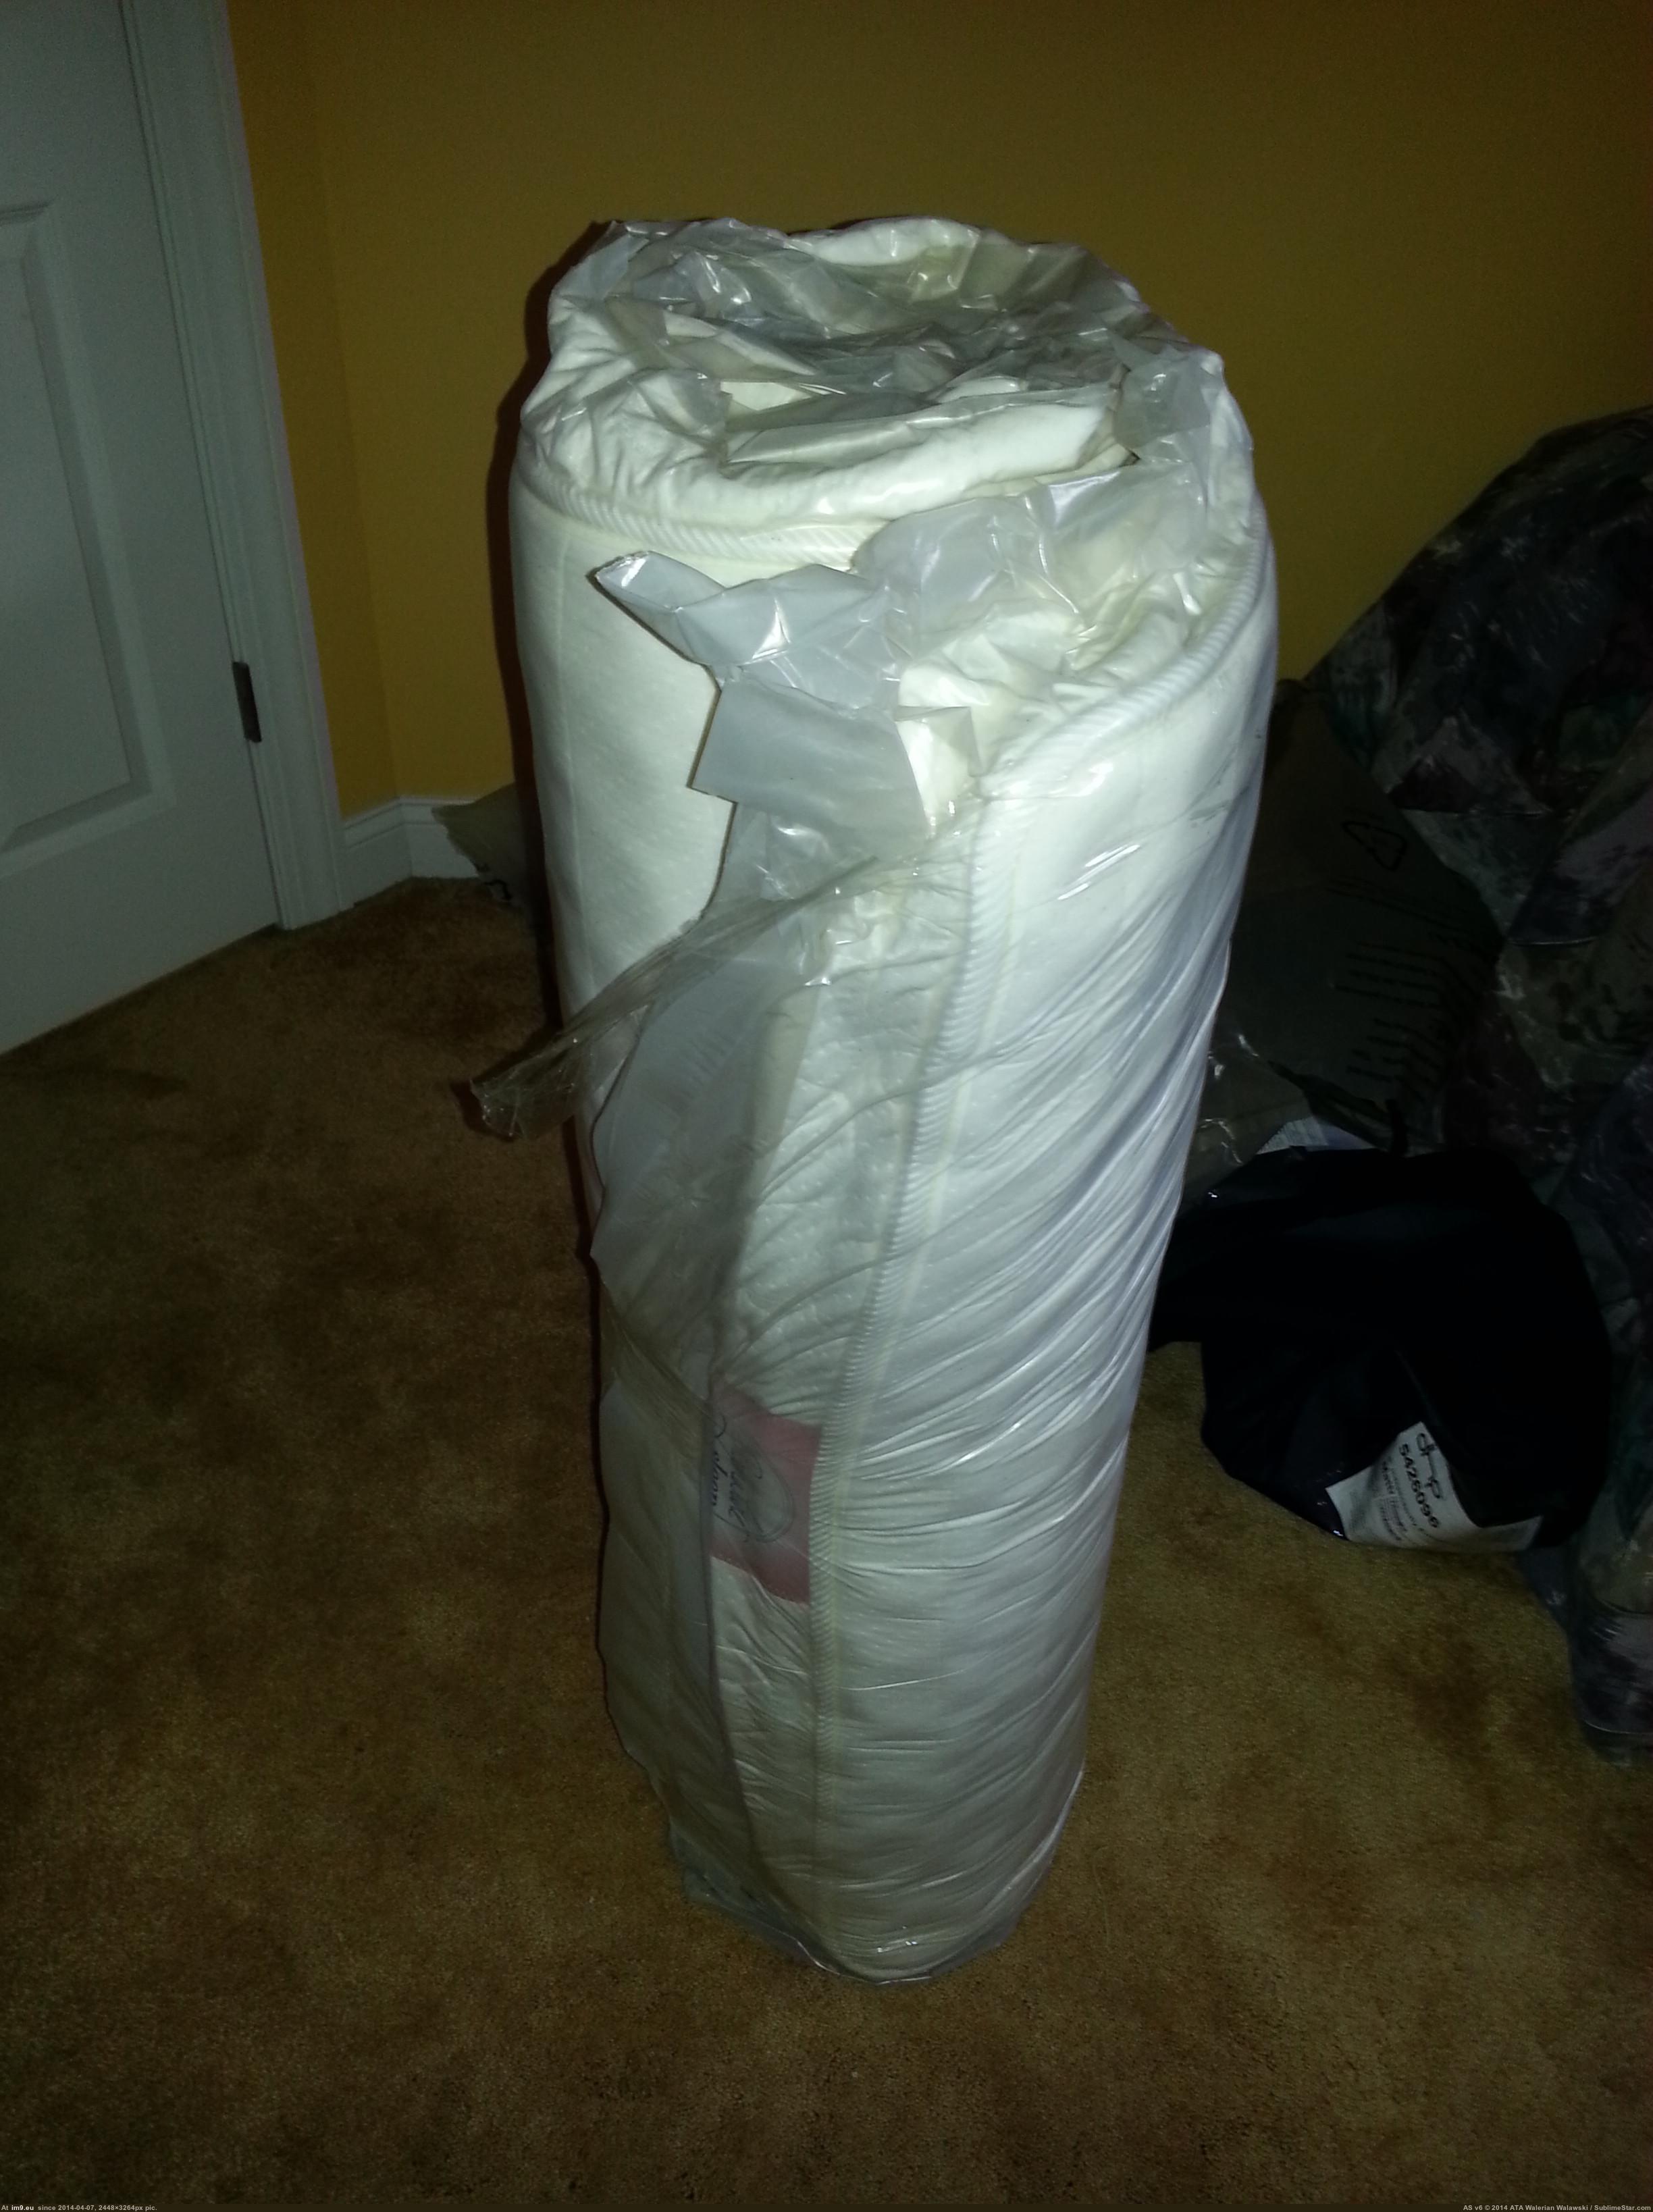 Pic. #Broke #Bag #Vacuum #Duffle #Unrolled #Seal #Mattress, 466780B – My  r/MILDLYINTERESTING favs